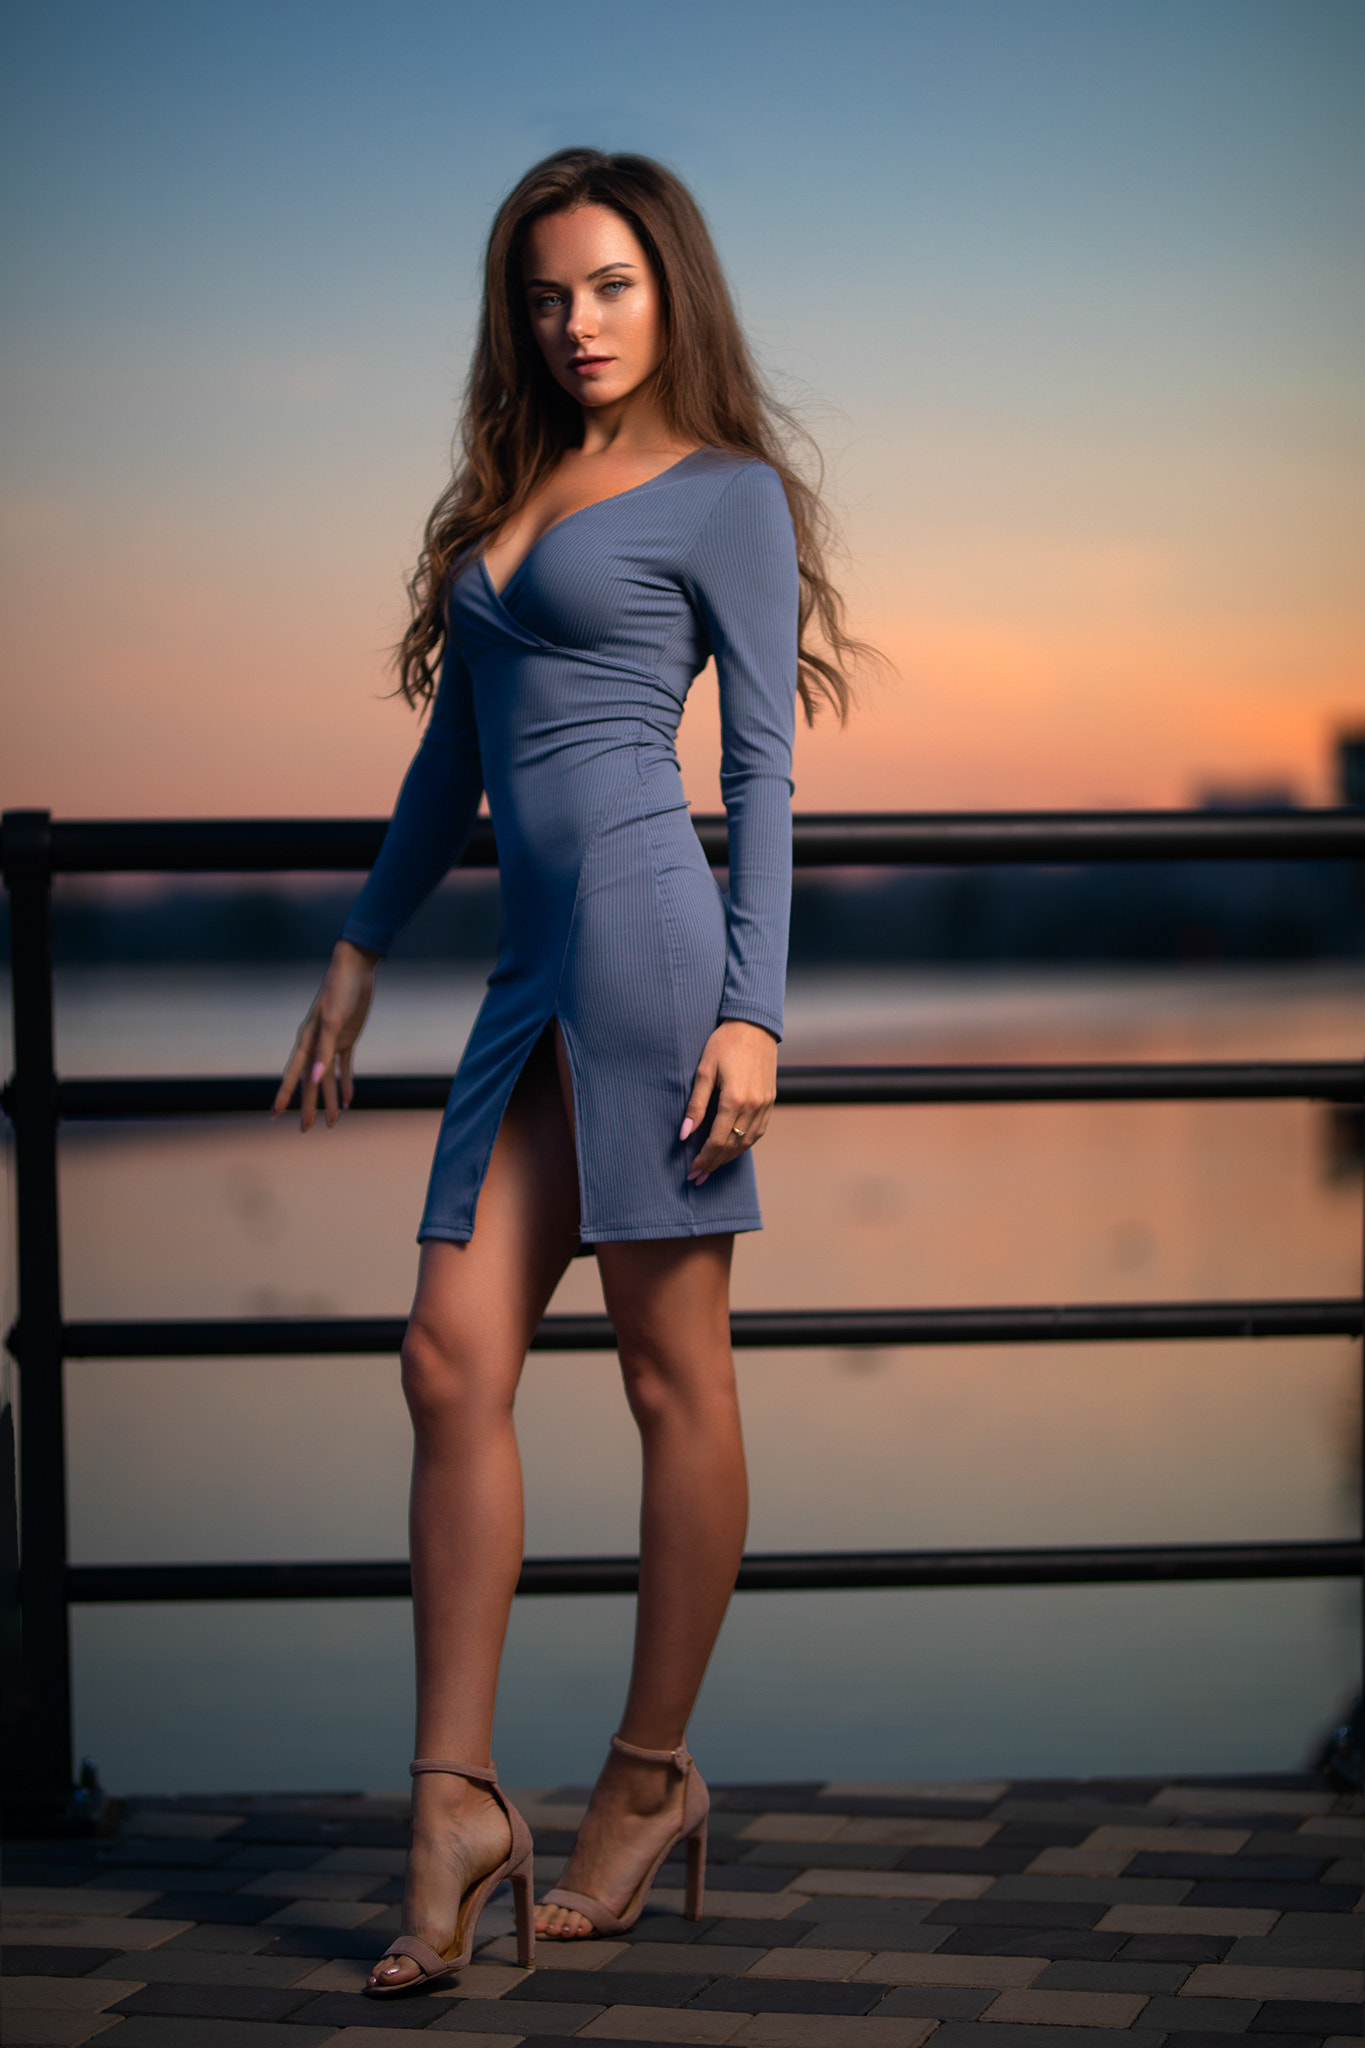 Dmitry Shulgin Women Brunette Long Hair Looking At Viewer Dress Shoes High Heels Blue Clothing Fence 1365x2048